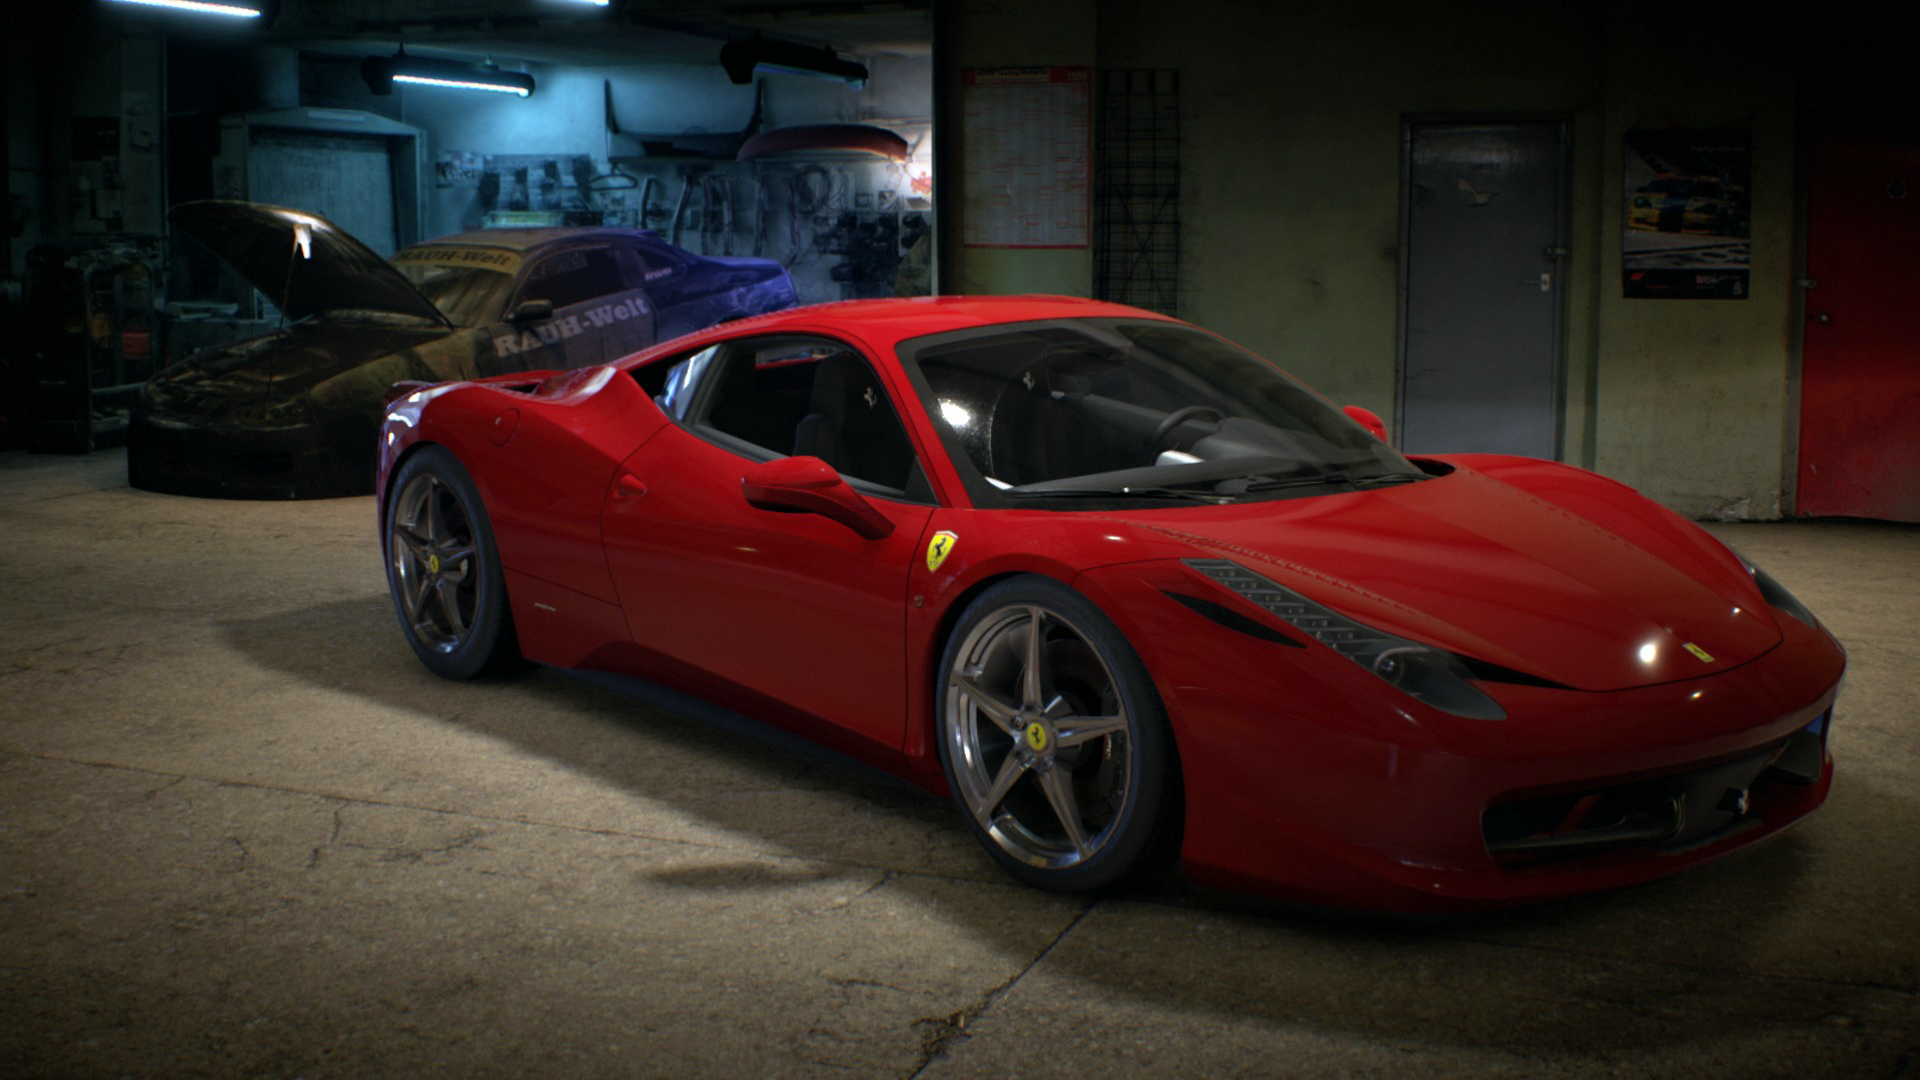 General 1920x1080 Need for Speed Need for Speed 2015 car Ferrari Ferrari 458 italian cars Stellantis video games